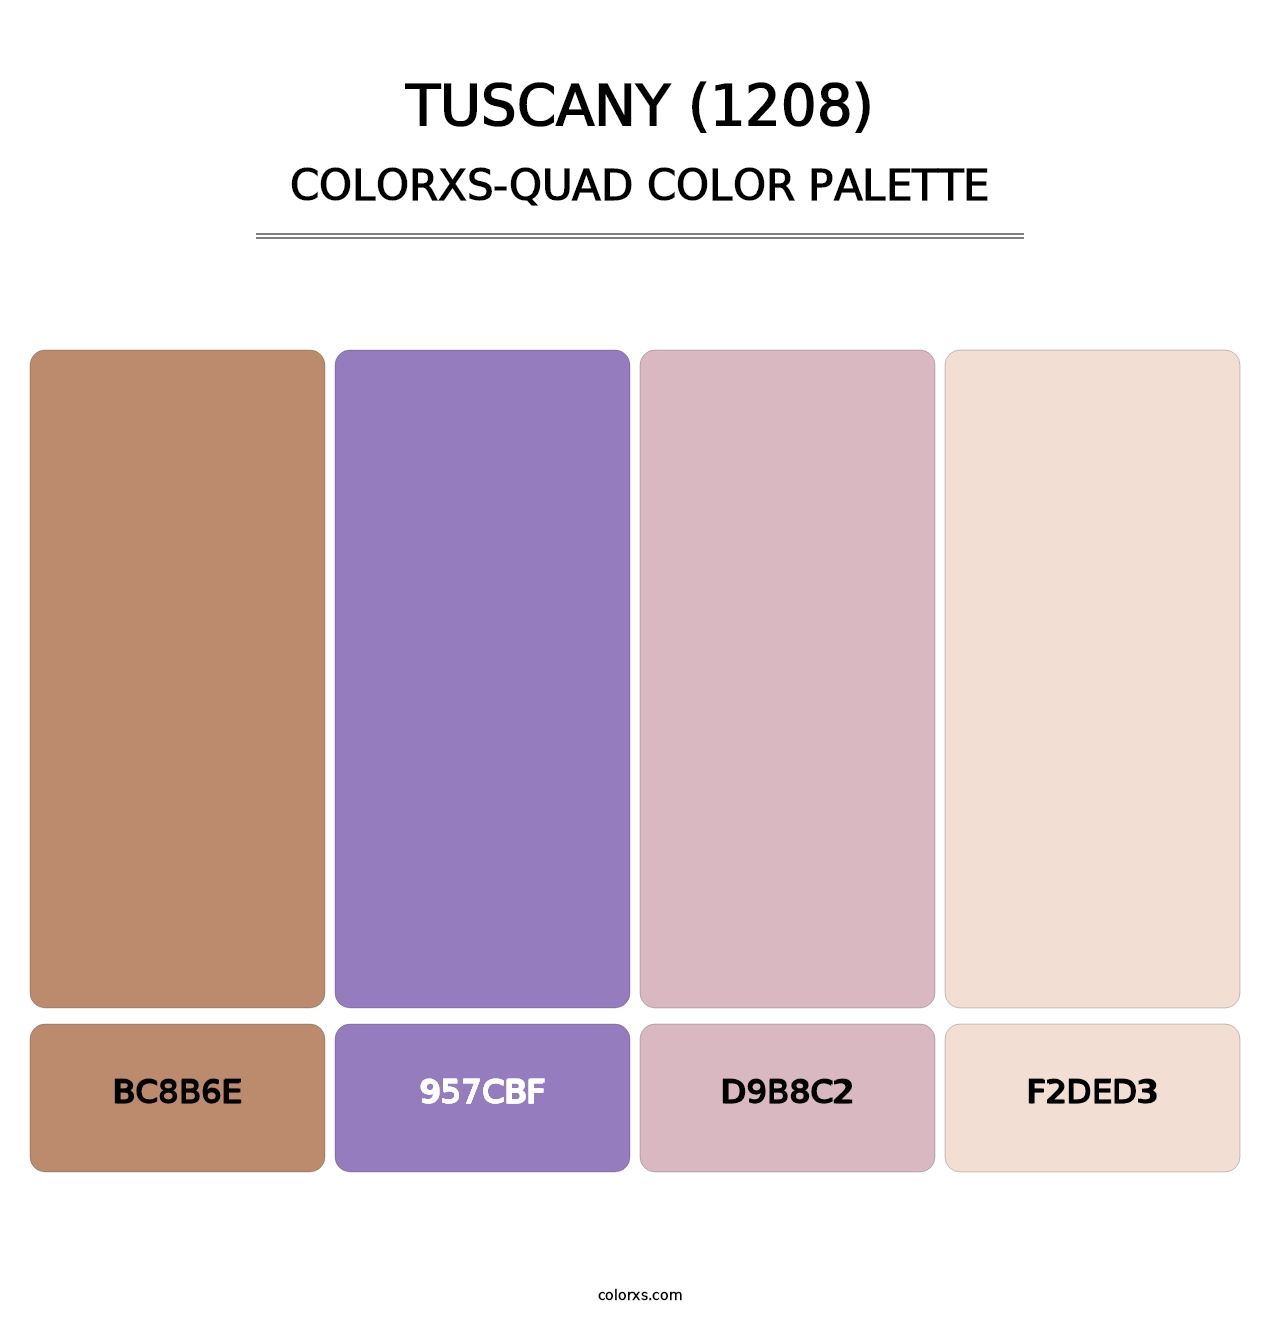 Tuscany (1208) - Colorxs Quad Palette